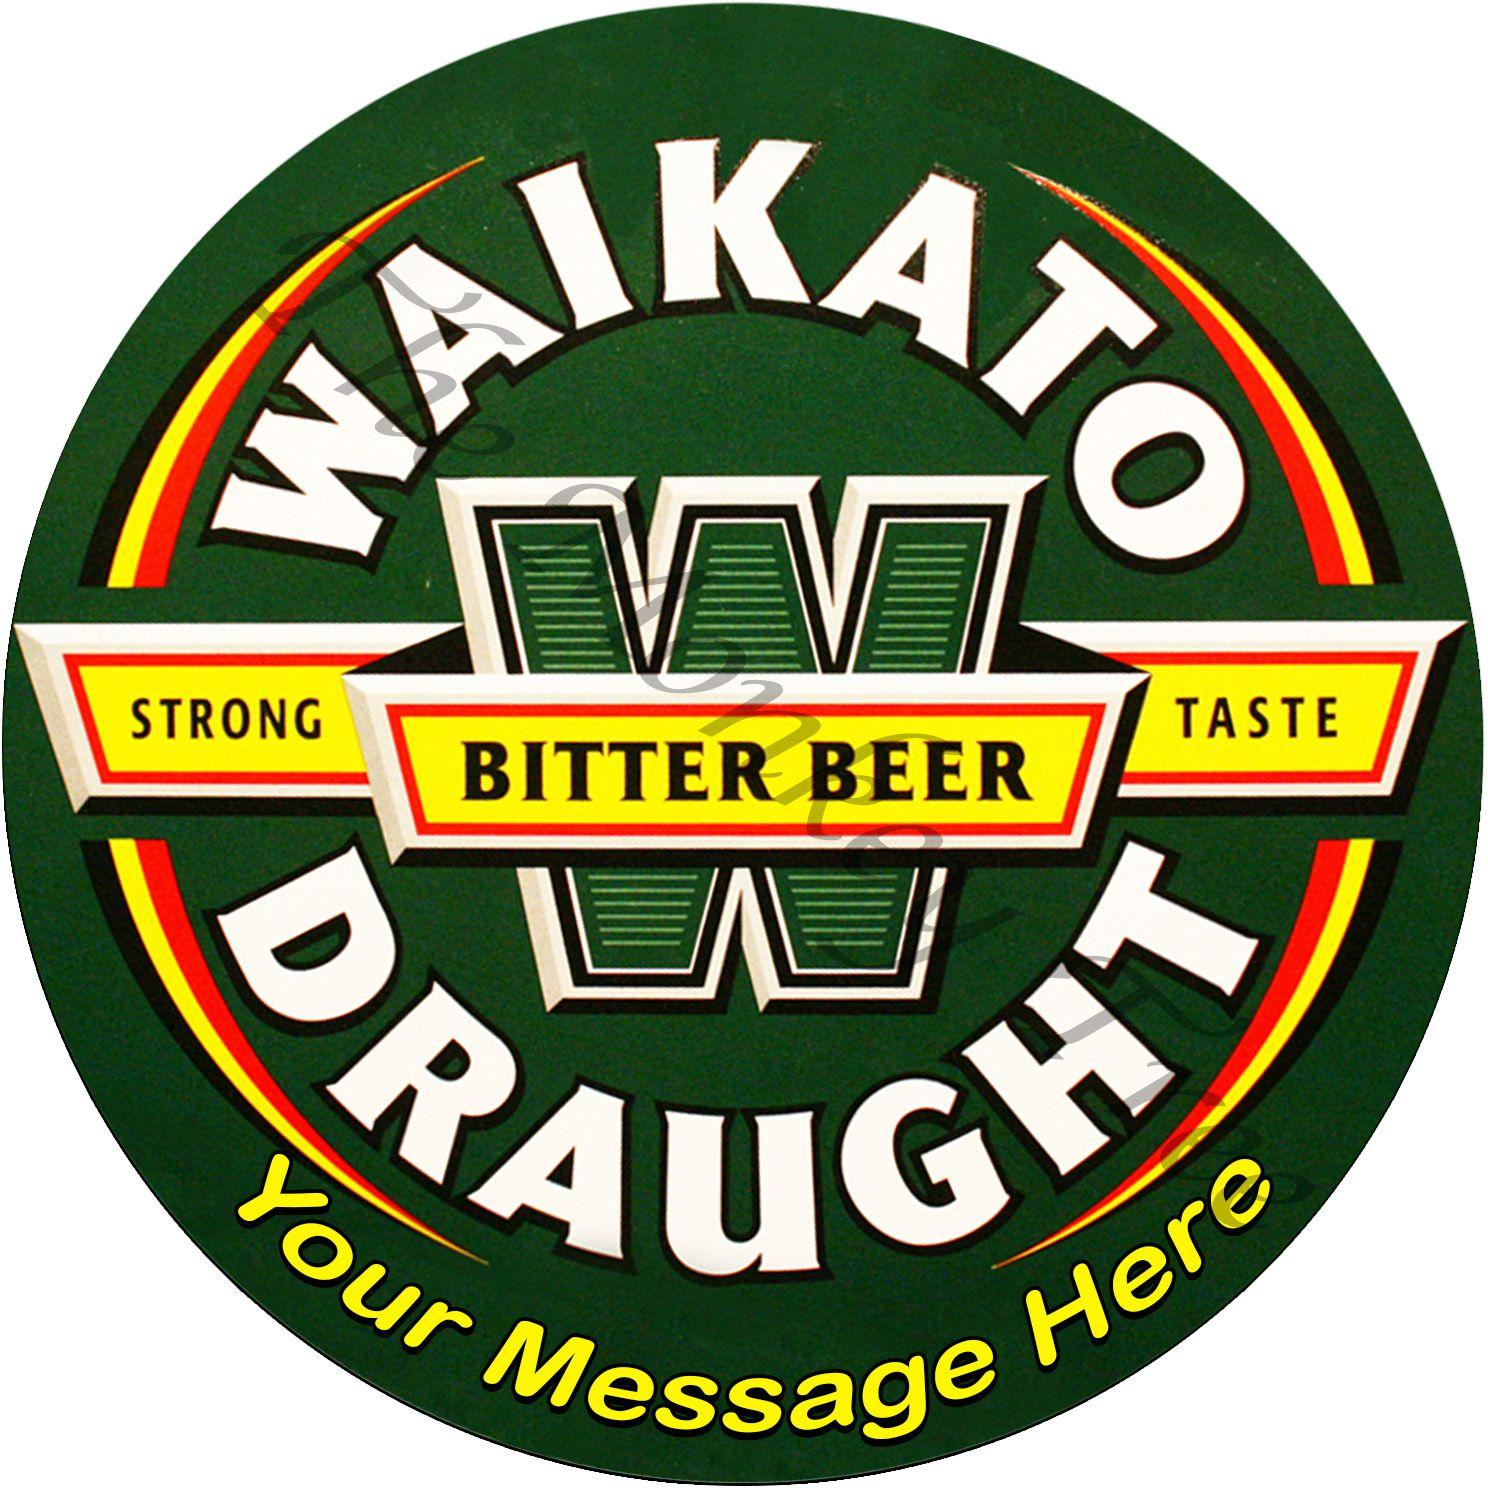 Draught Beer Logo - Waikato Draught Beer Logo Edible Cake Image Topper. The Monkey Tree